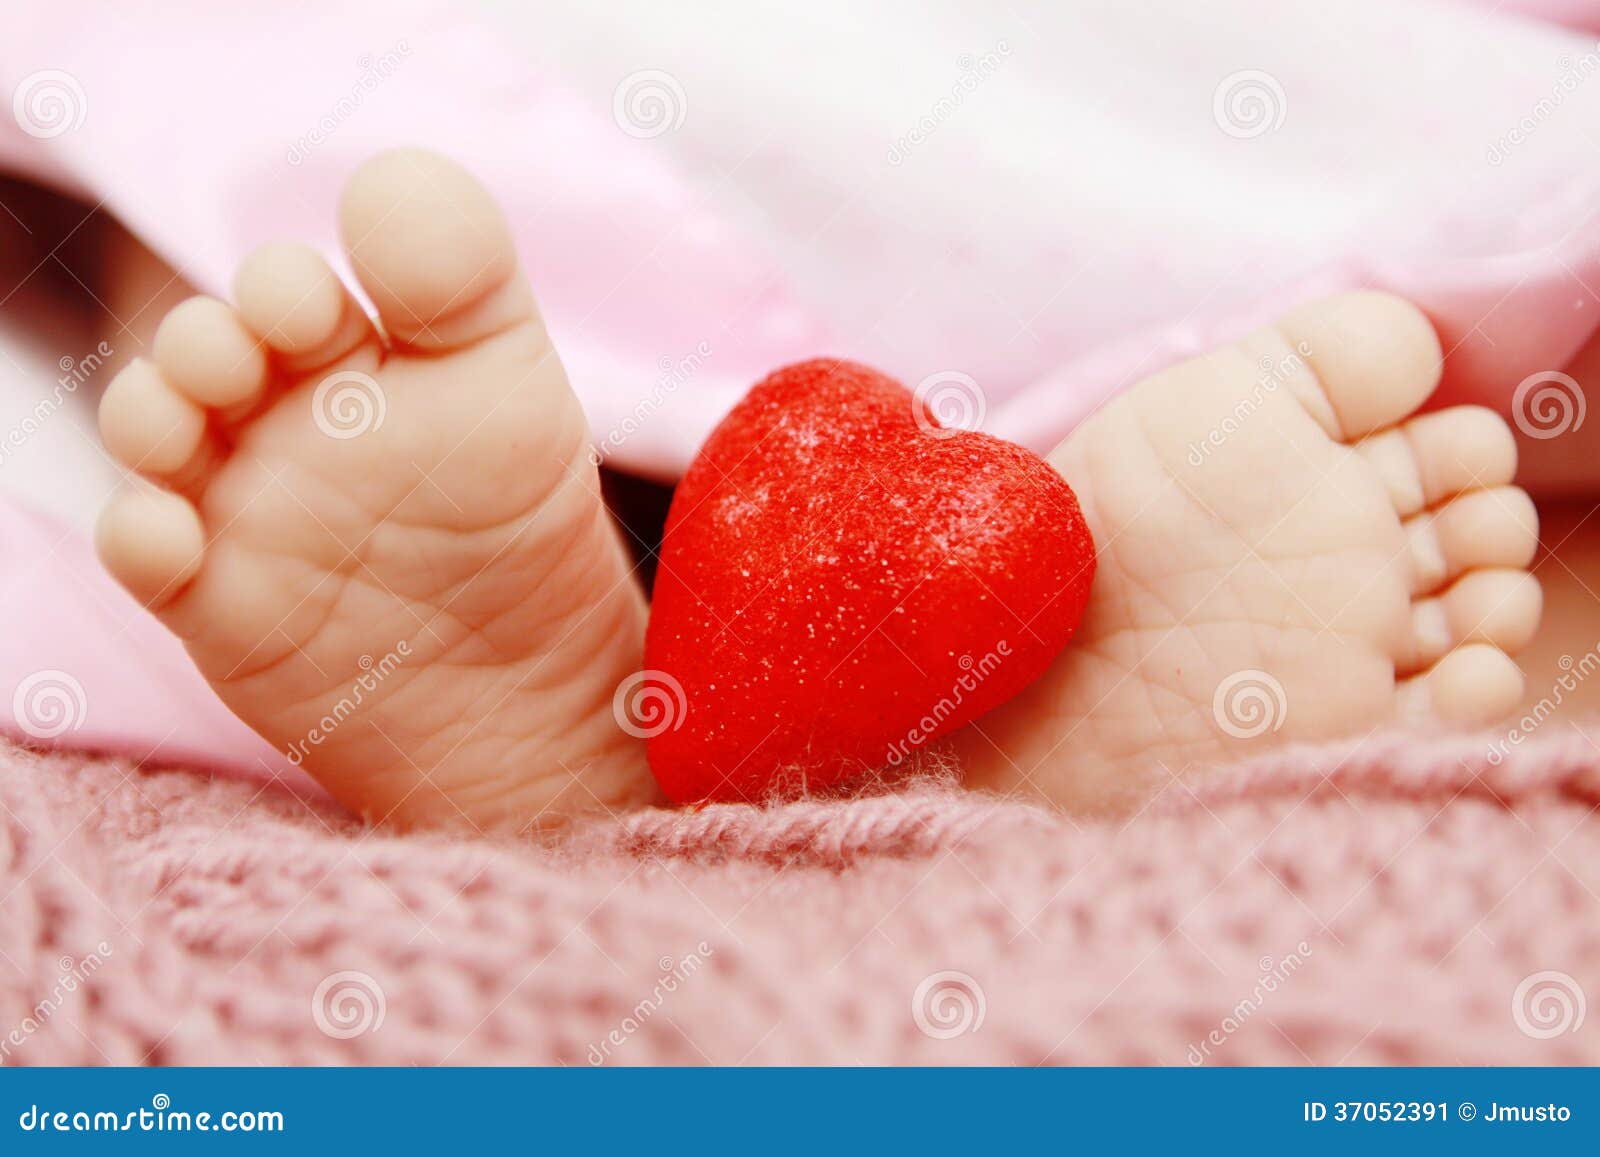 Baby love stock image. Image of newborn, adorable, newborns - 37052391